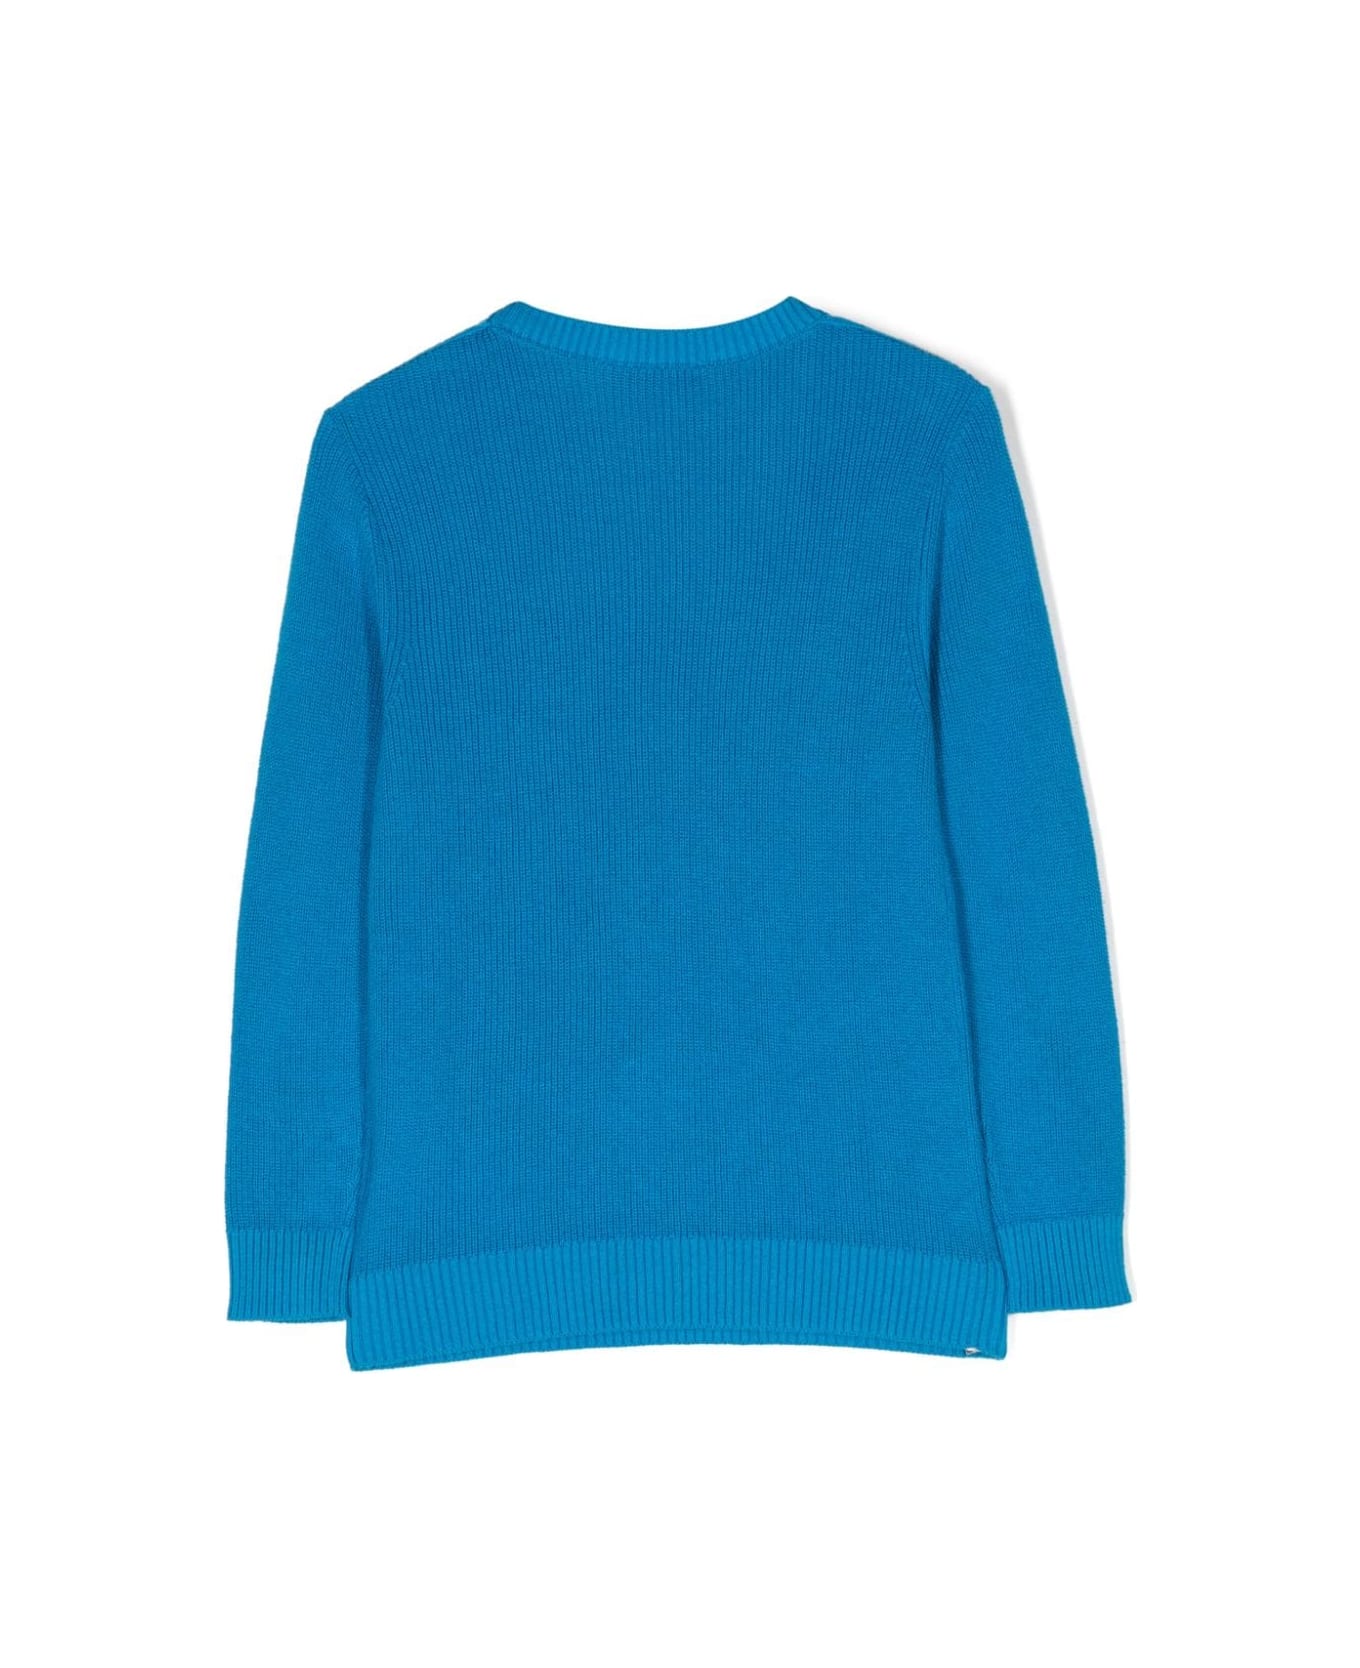 Manuel Ritz Light Blue Chill Neck Sweater - Light blue